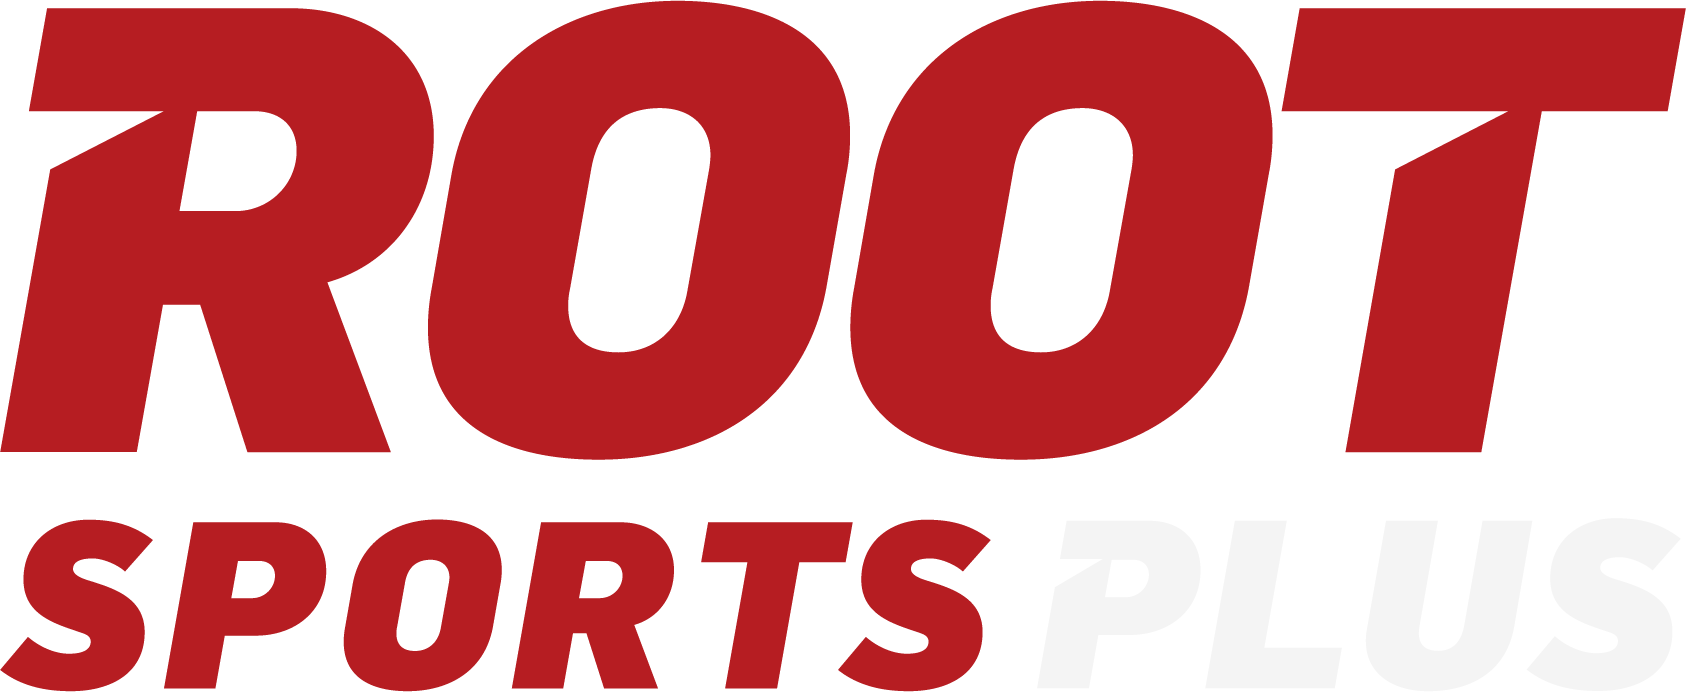 root sports logo